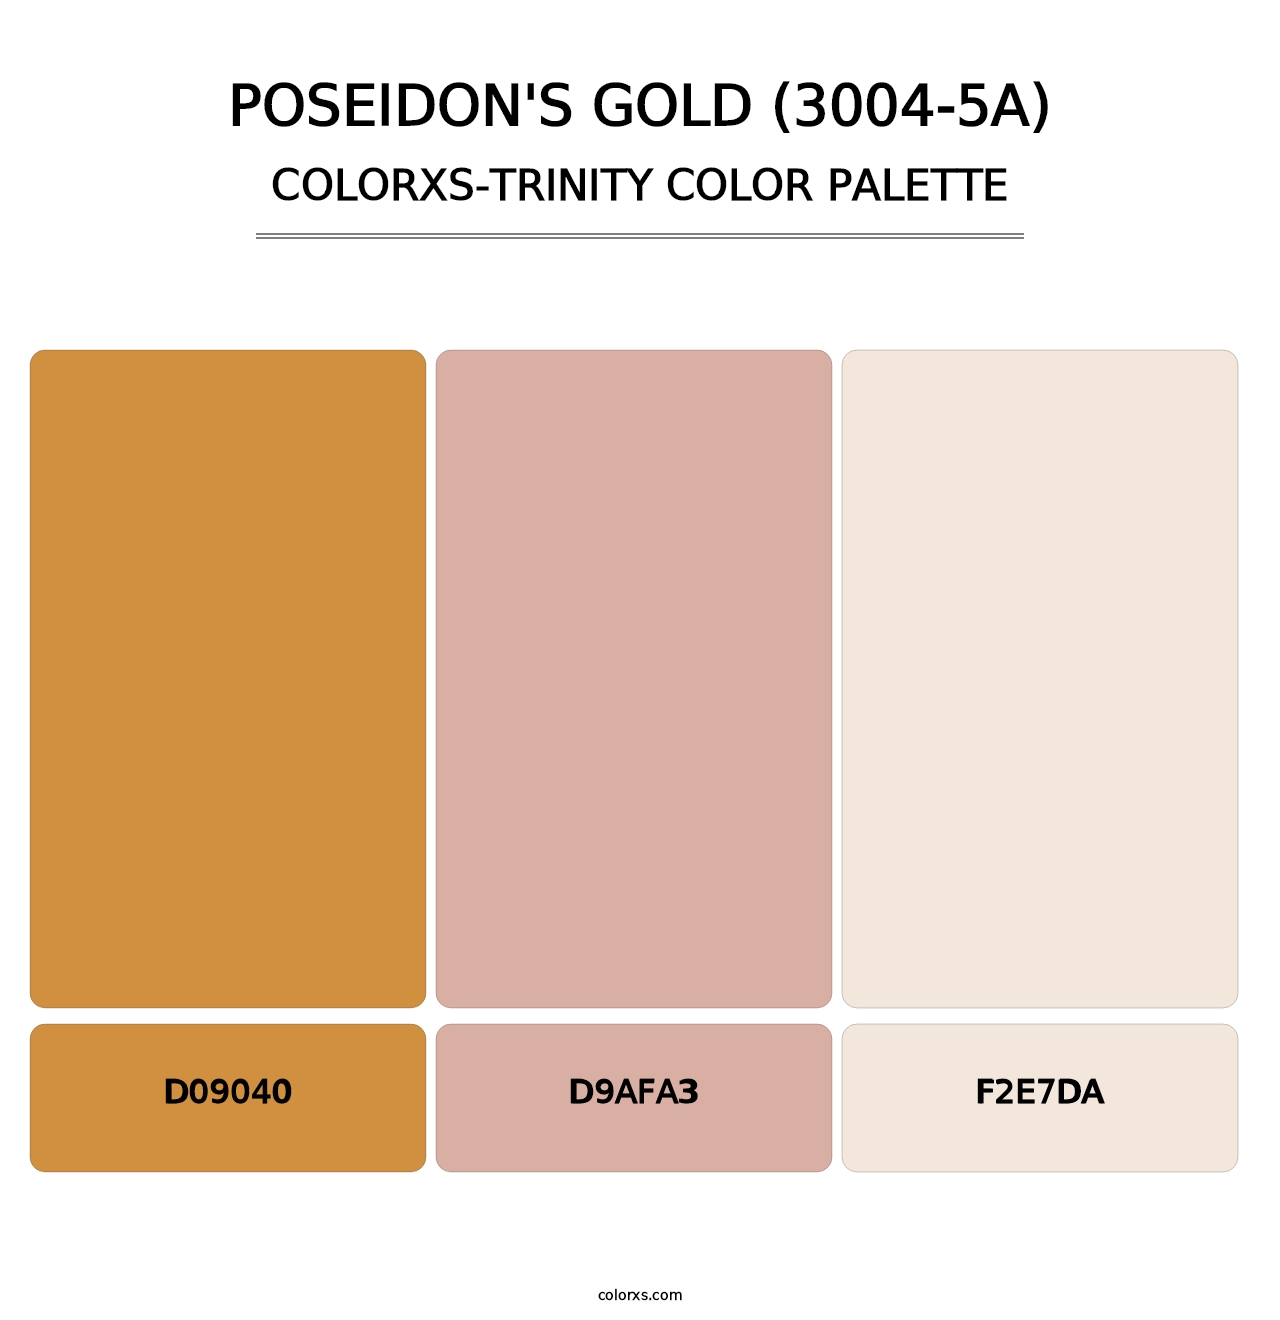 Poseidon's Gold (3004-5A) - Colorxs Trinity Palette